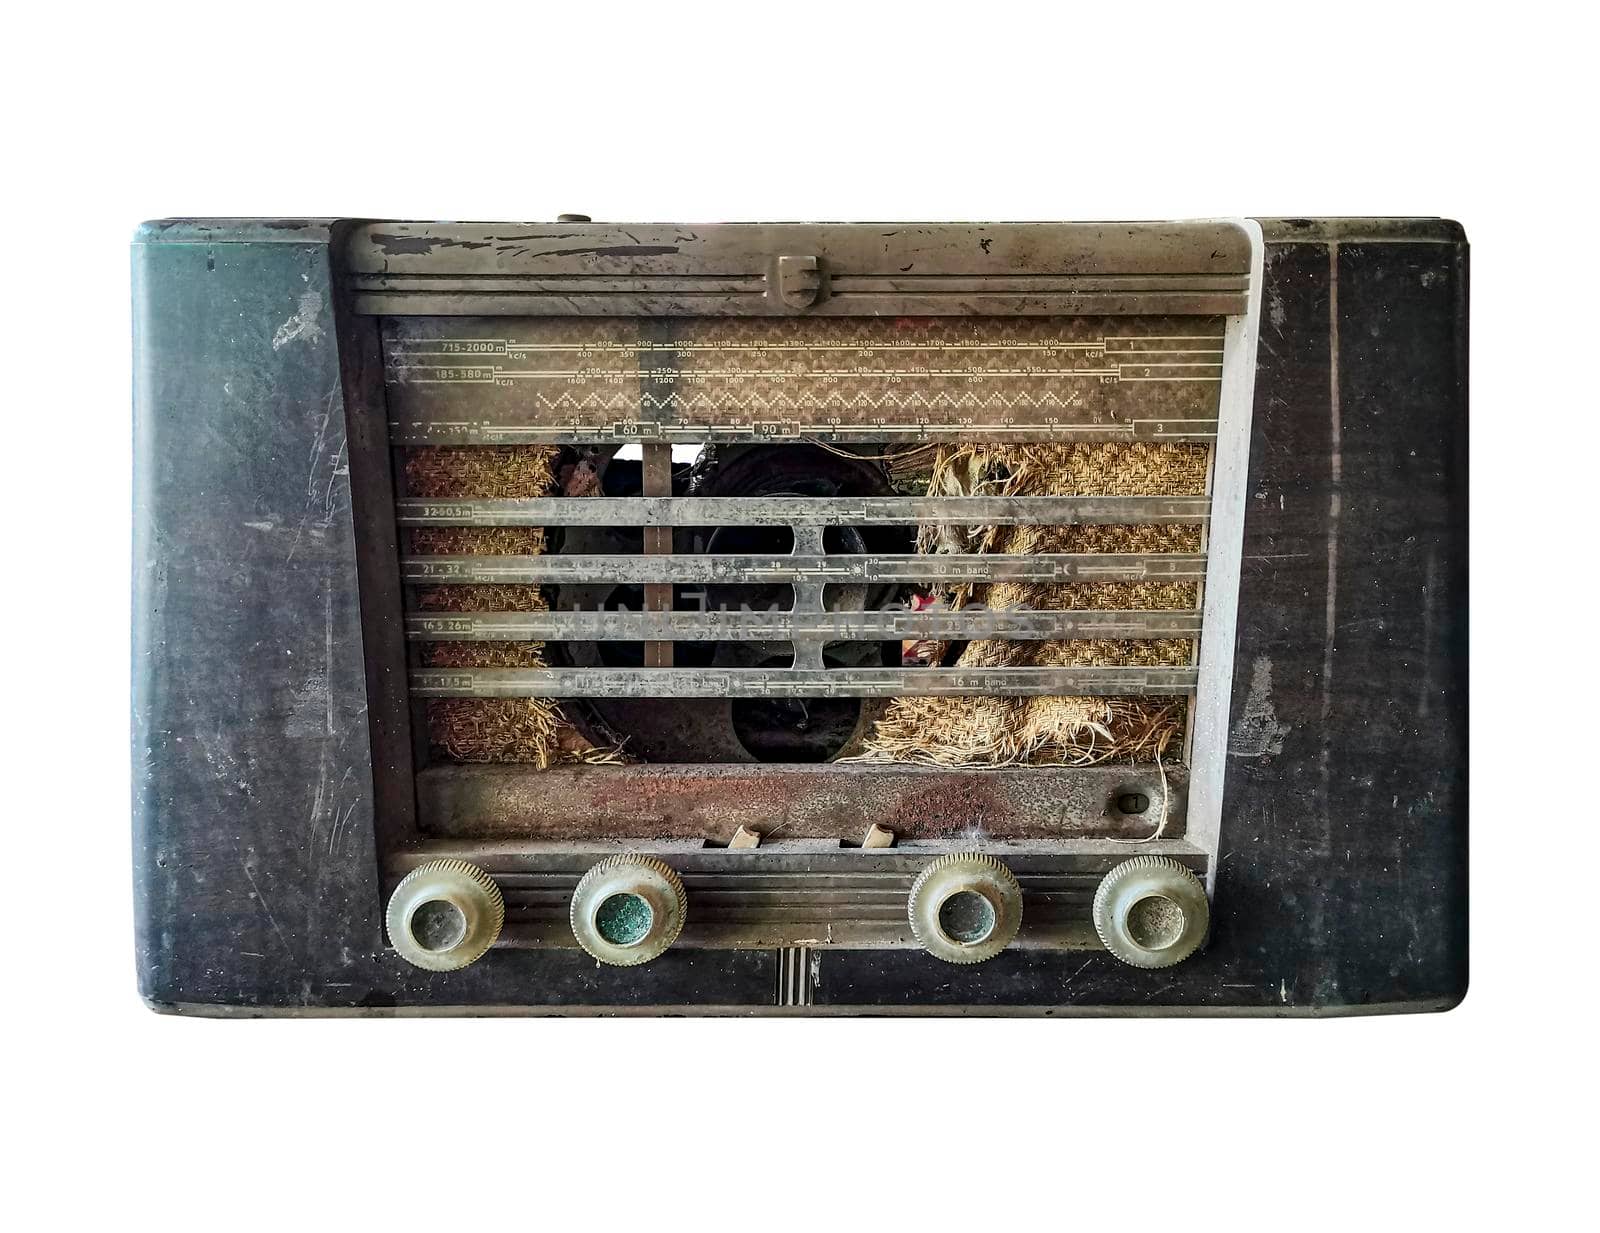 vintage wood transister radio isolated on white background by samunella